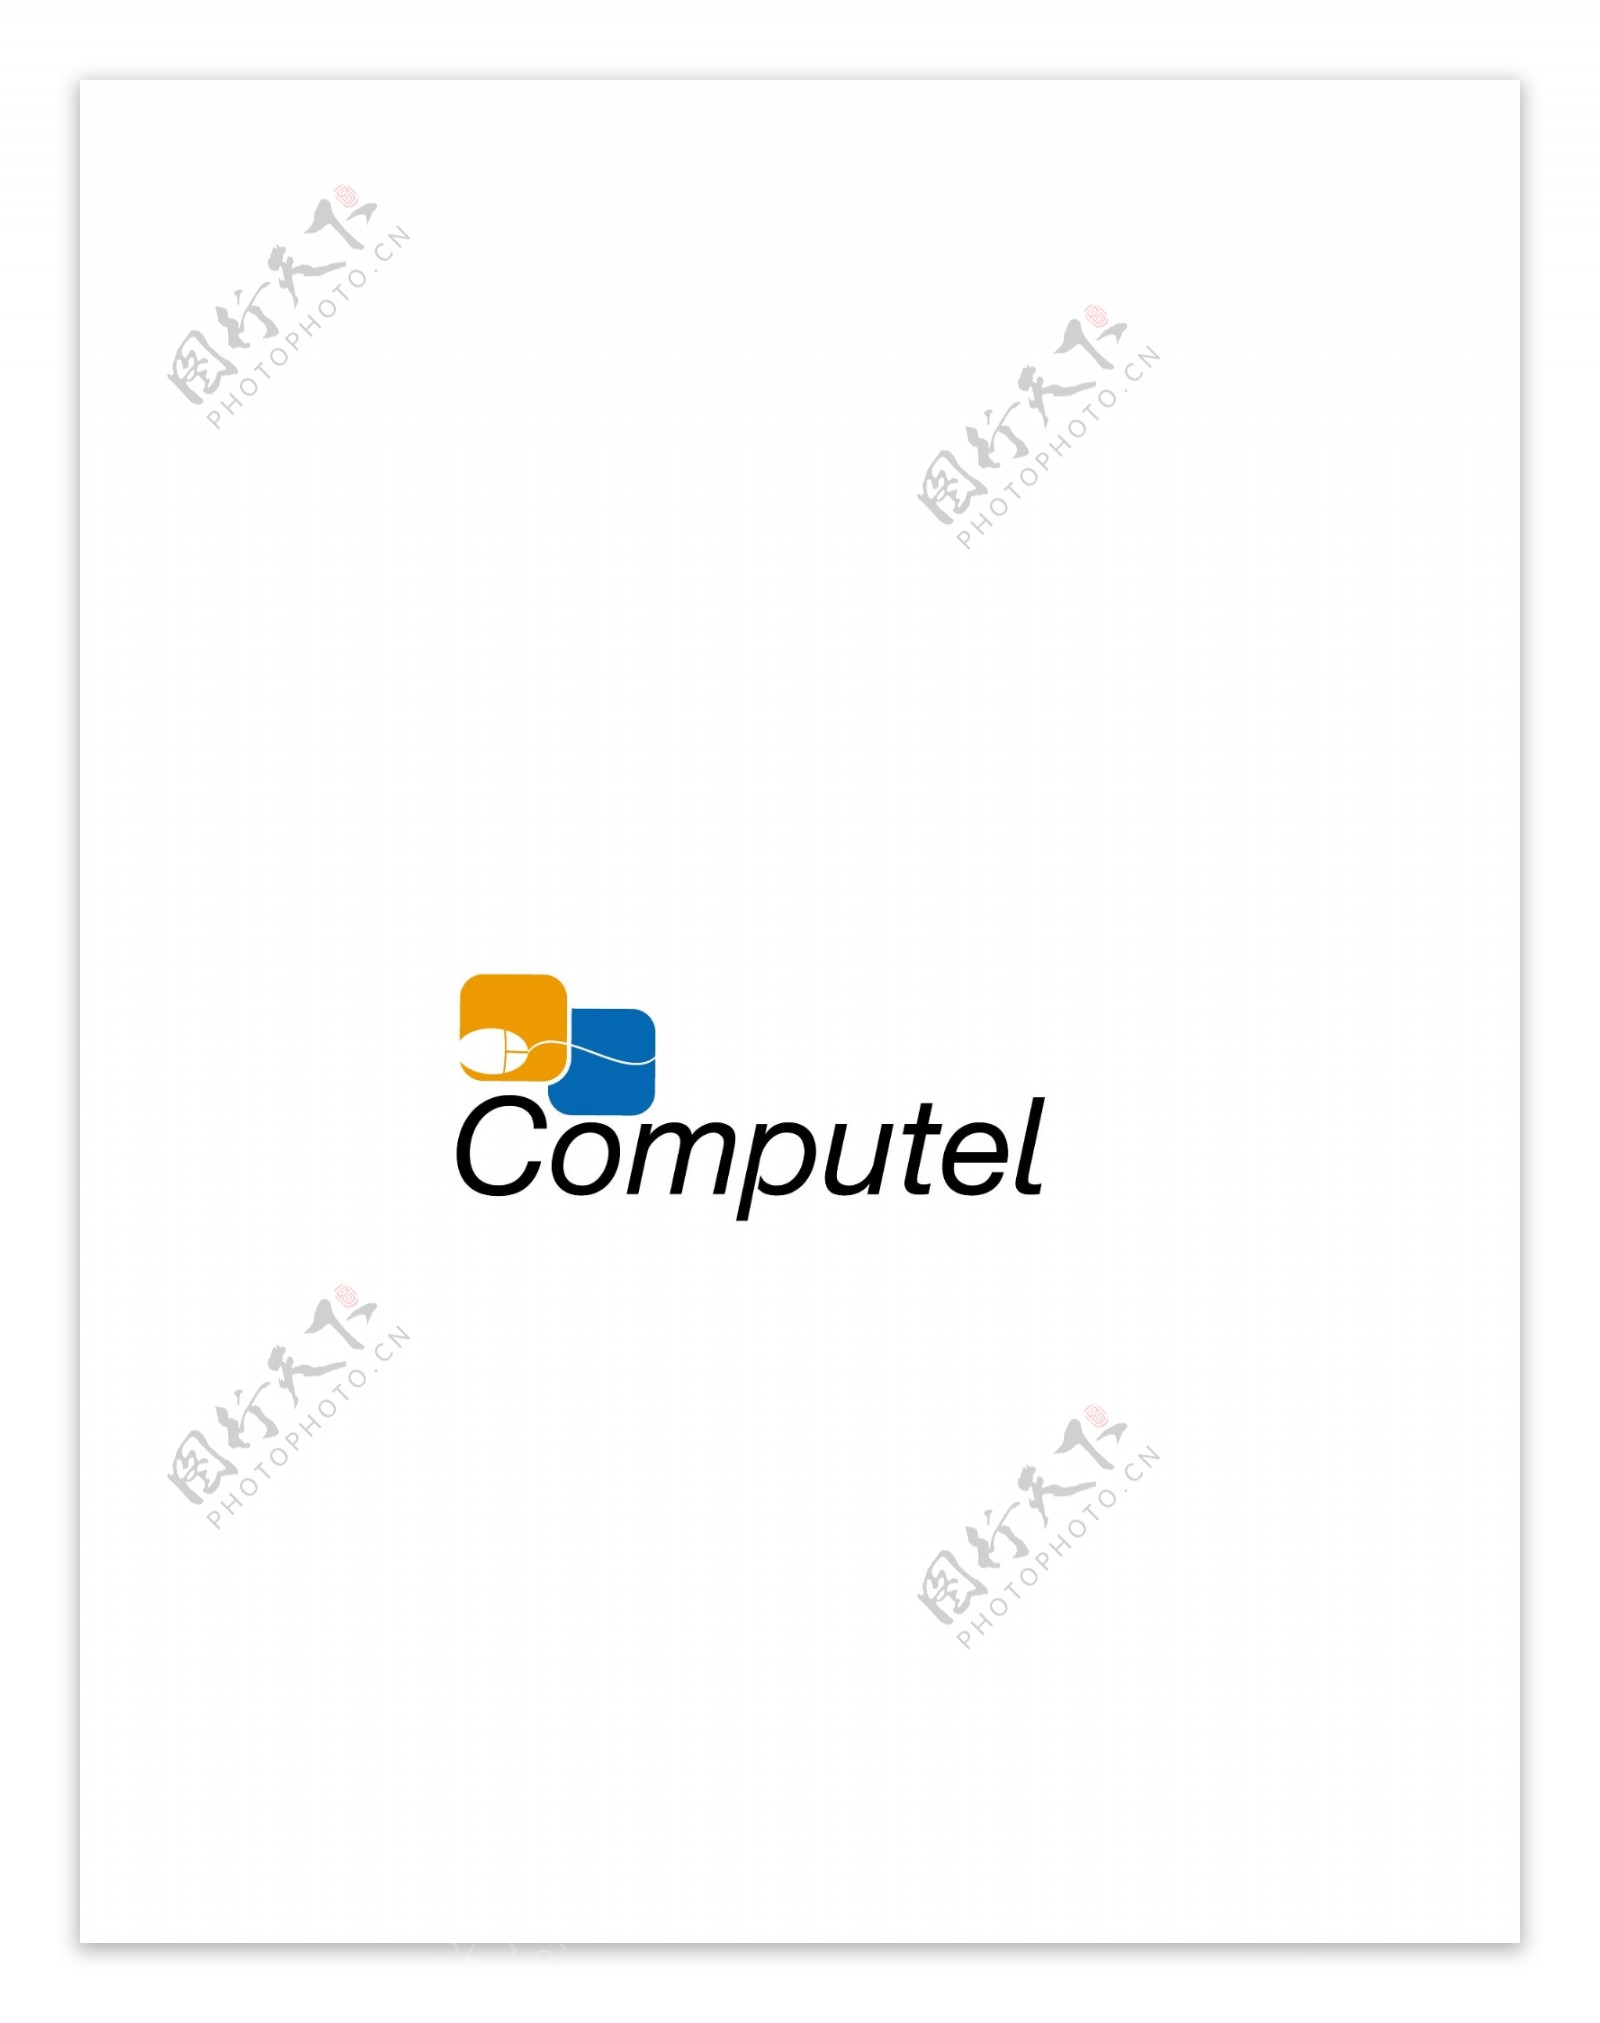 Computellogo设计欣赏Computel电脑软件标志下载标志设计欣赏